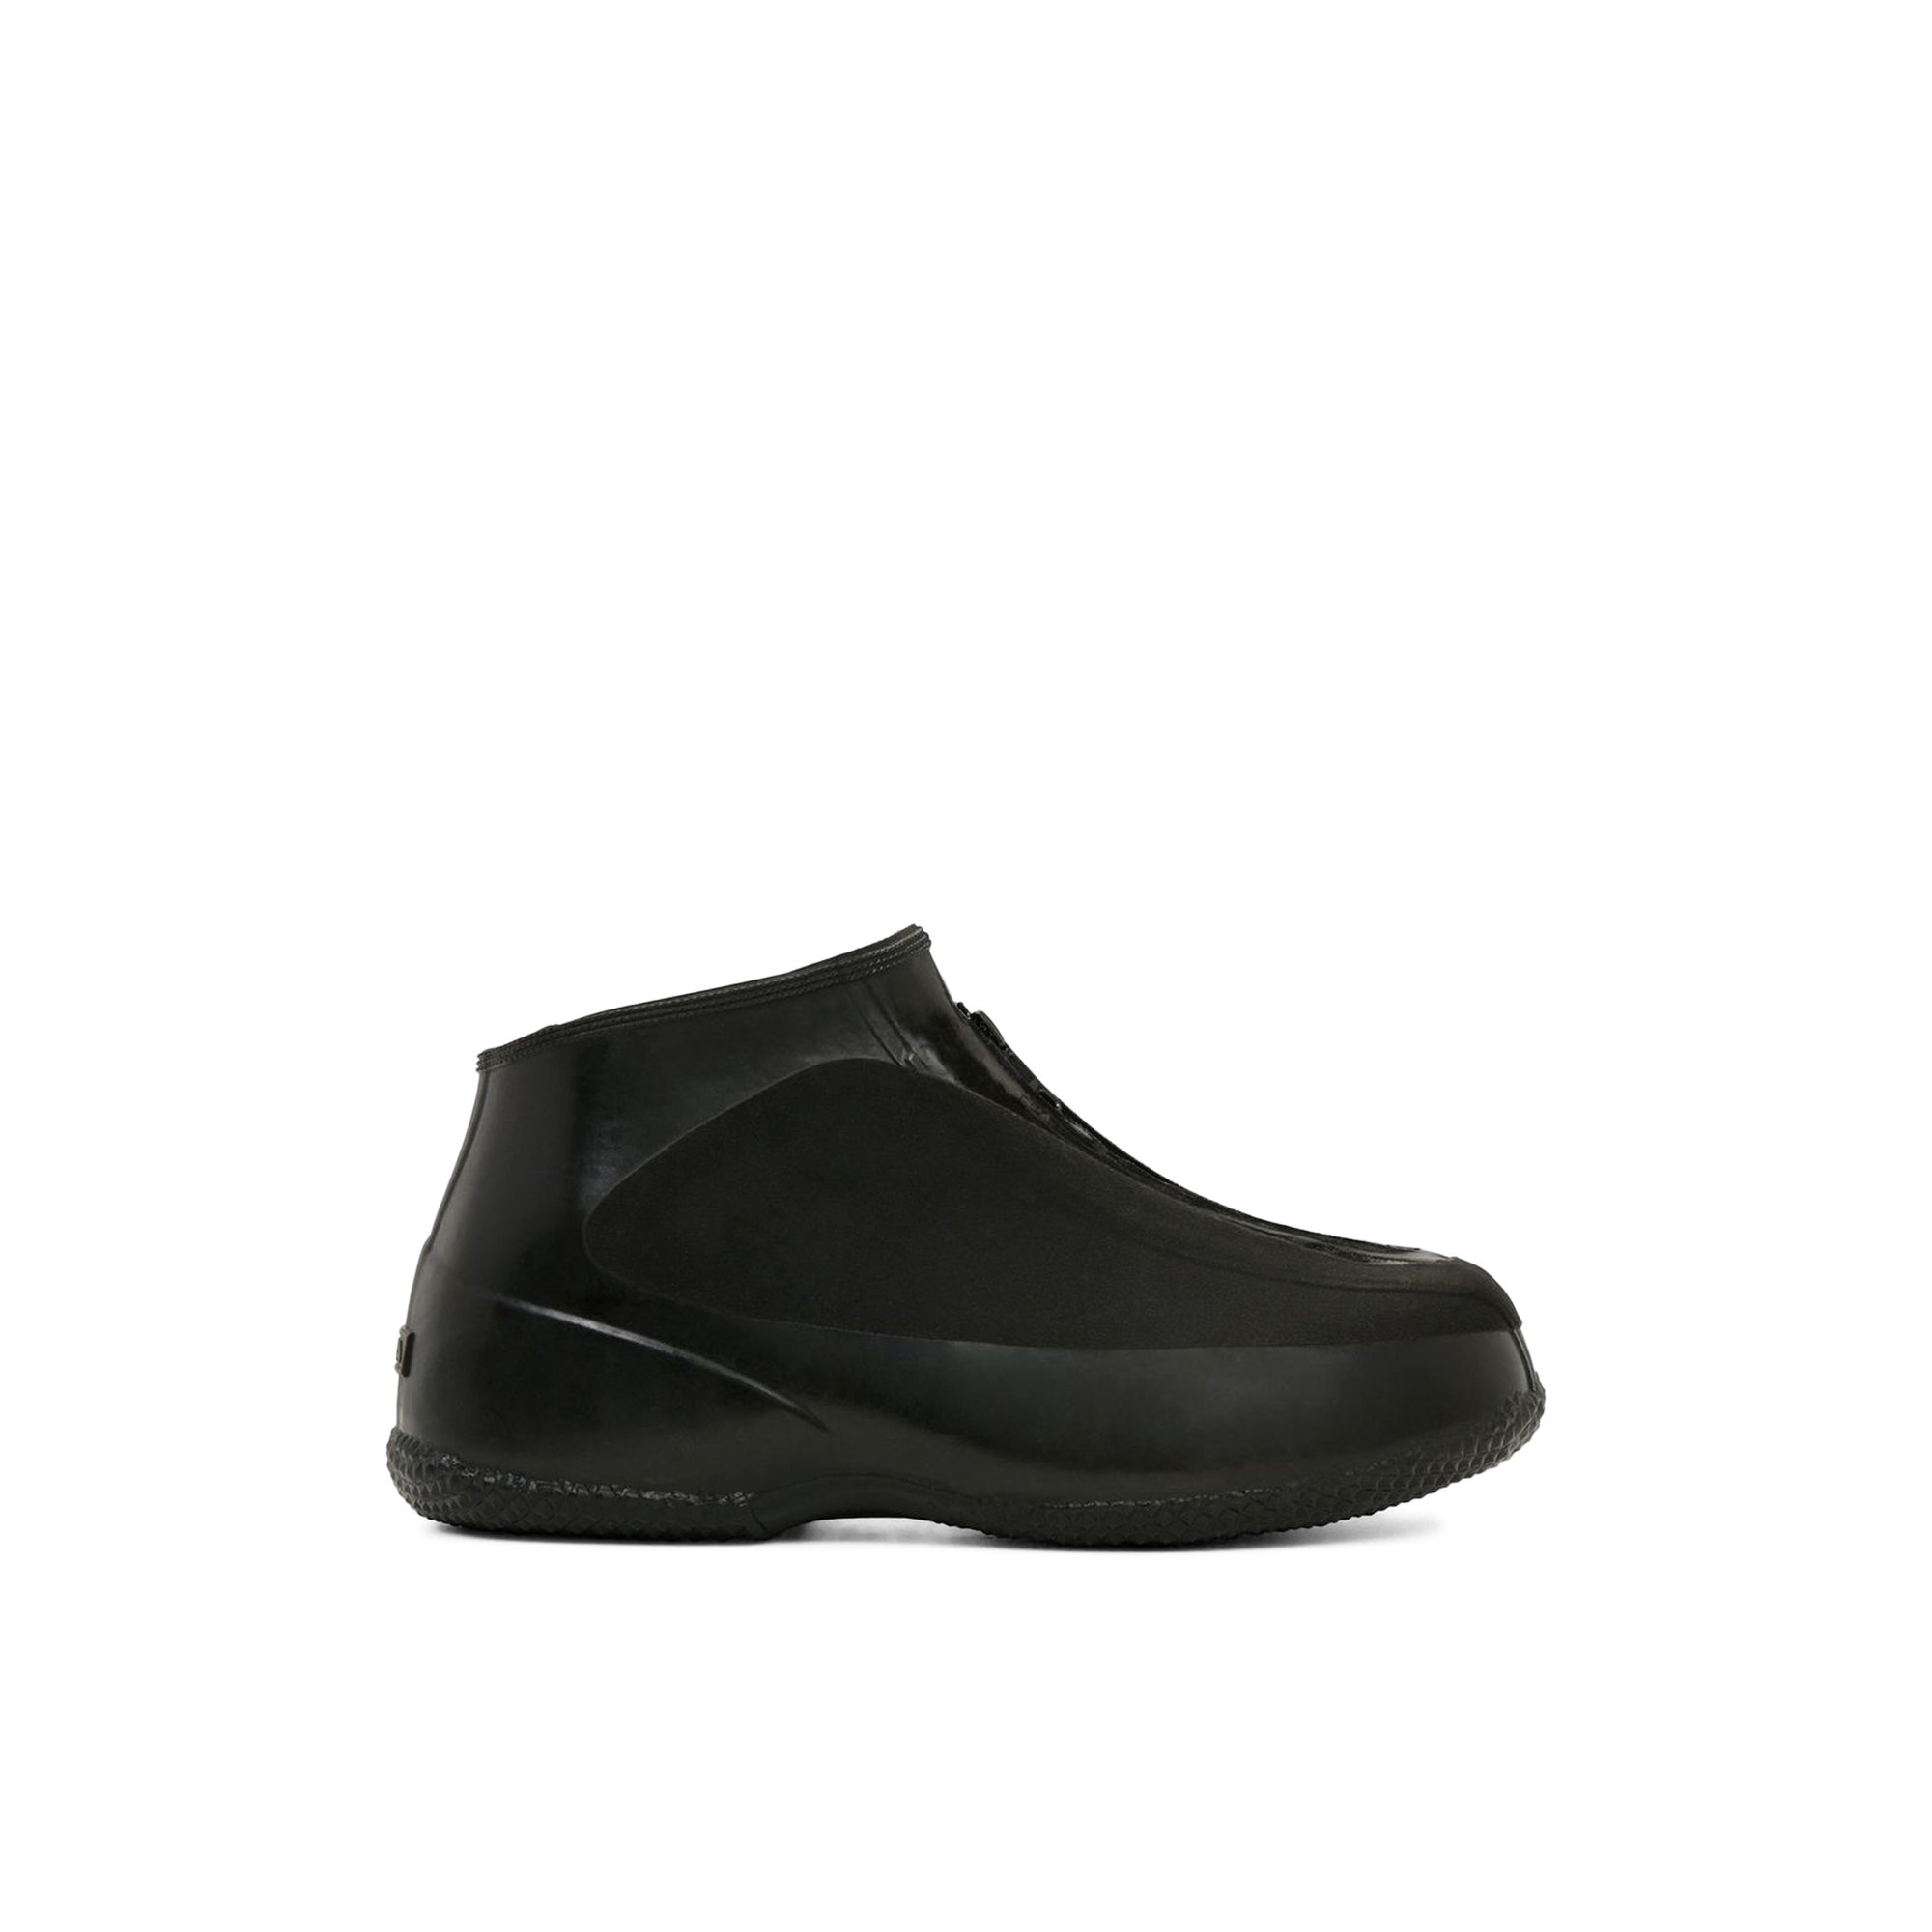 Acton Joule - Men's Footwear Boots Overshoes - Black photo